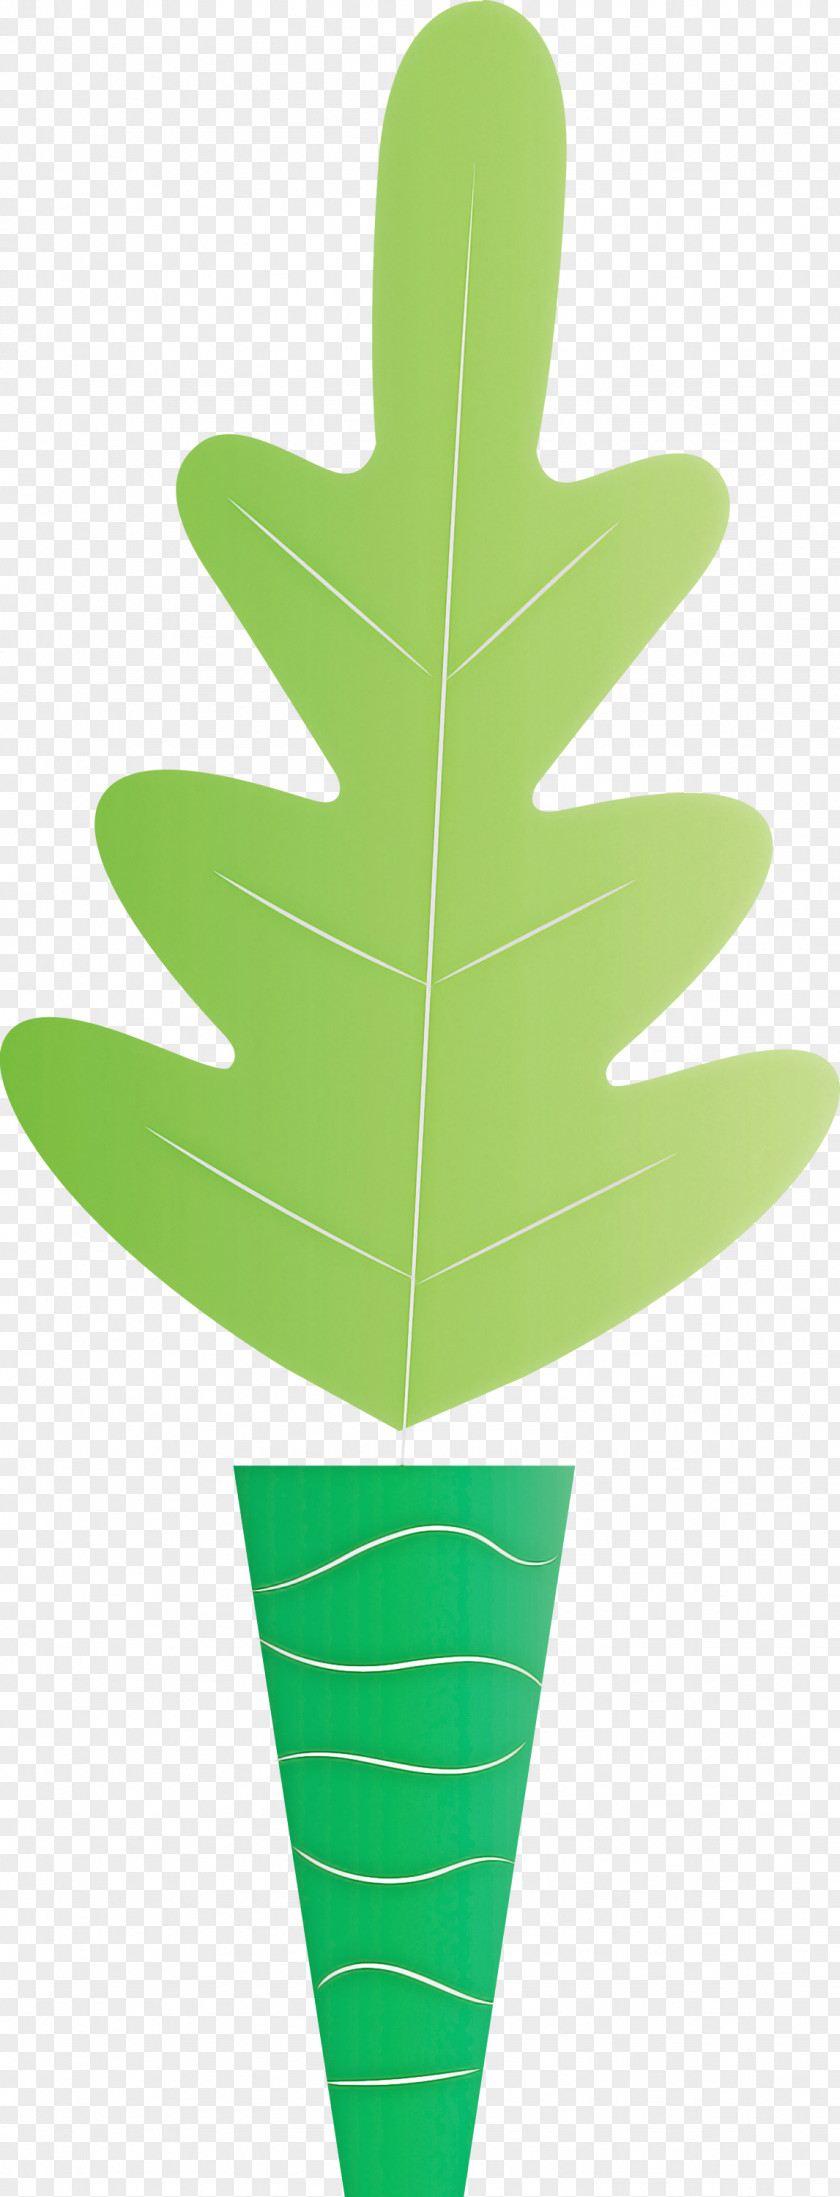 Leaf Plant Stem Geometry Line Angle Distribution PNG